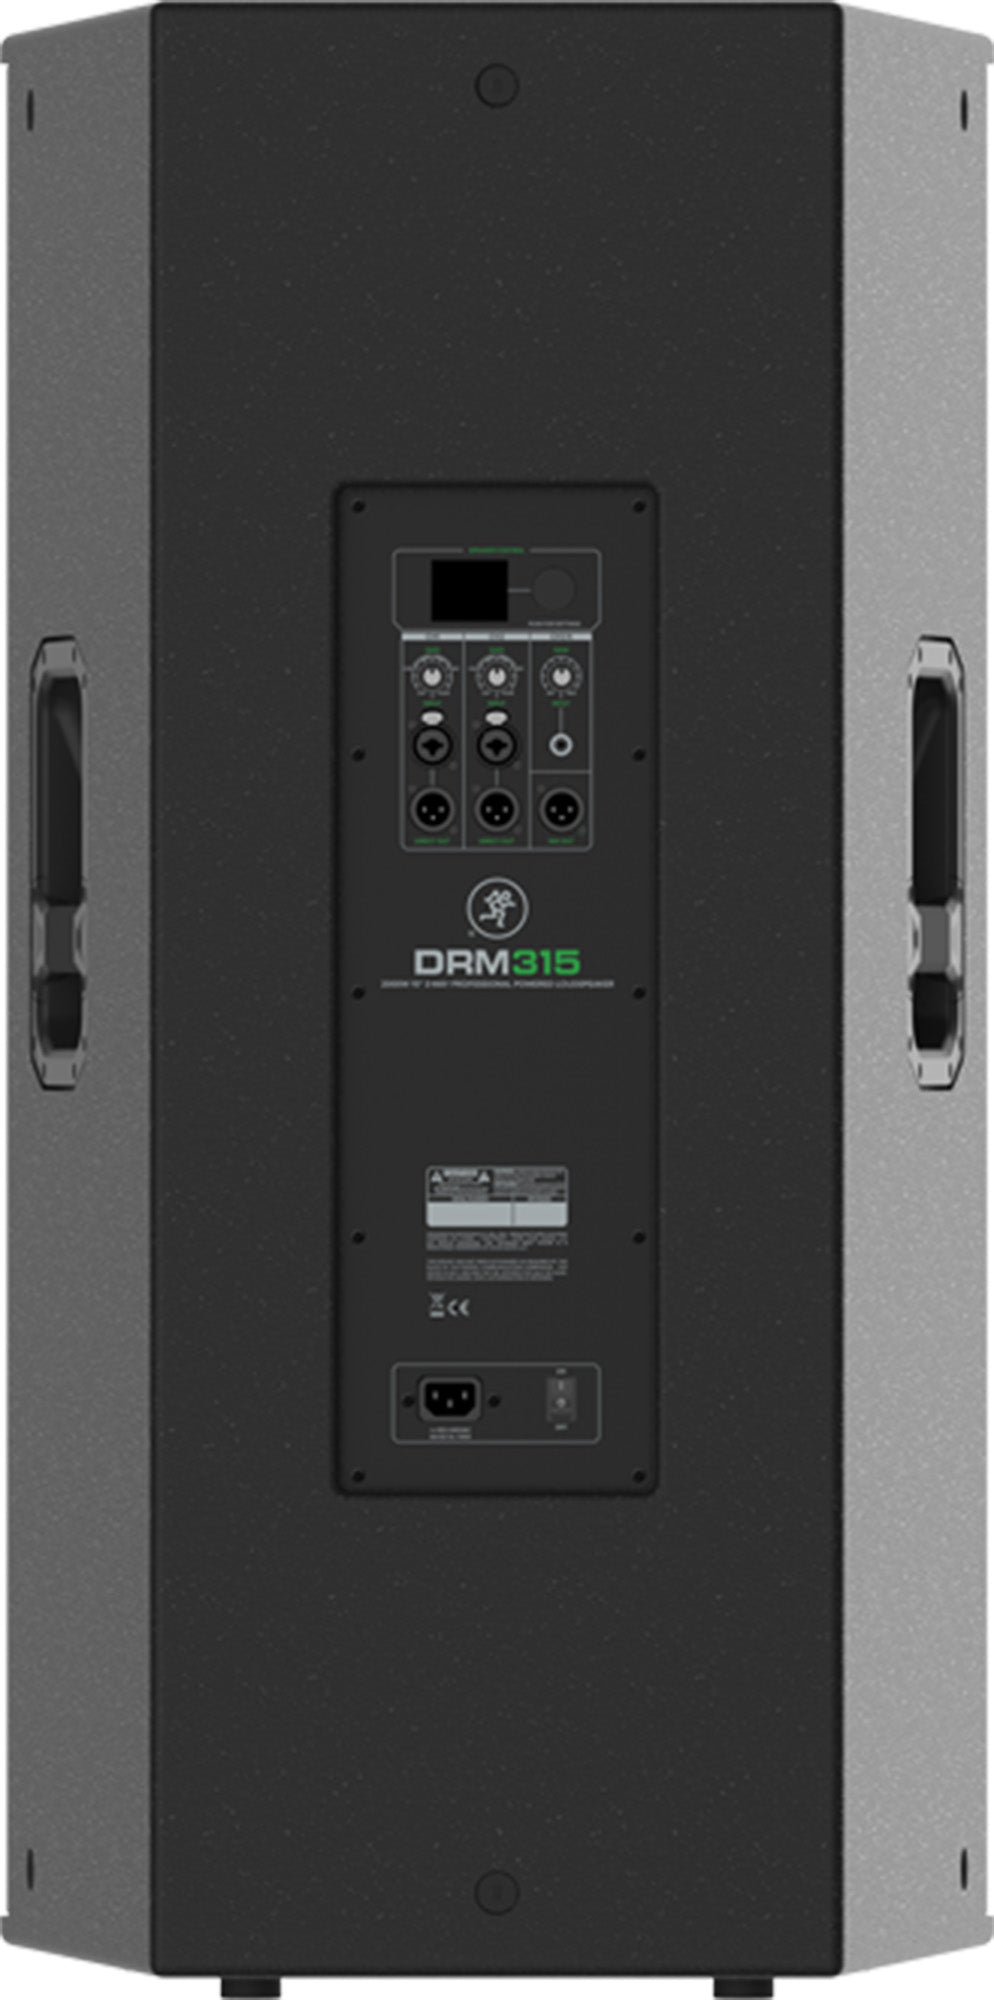 Mackie DRM315 2300W 15" 3-way Professional Powered Loudspeaker - Hollywood DJ